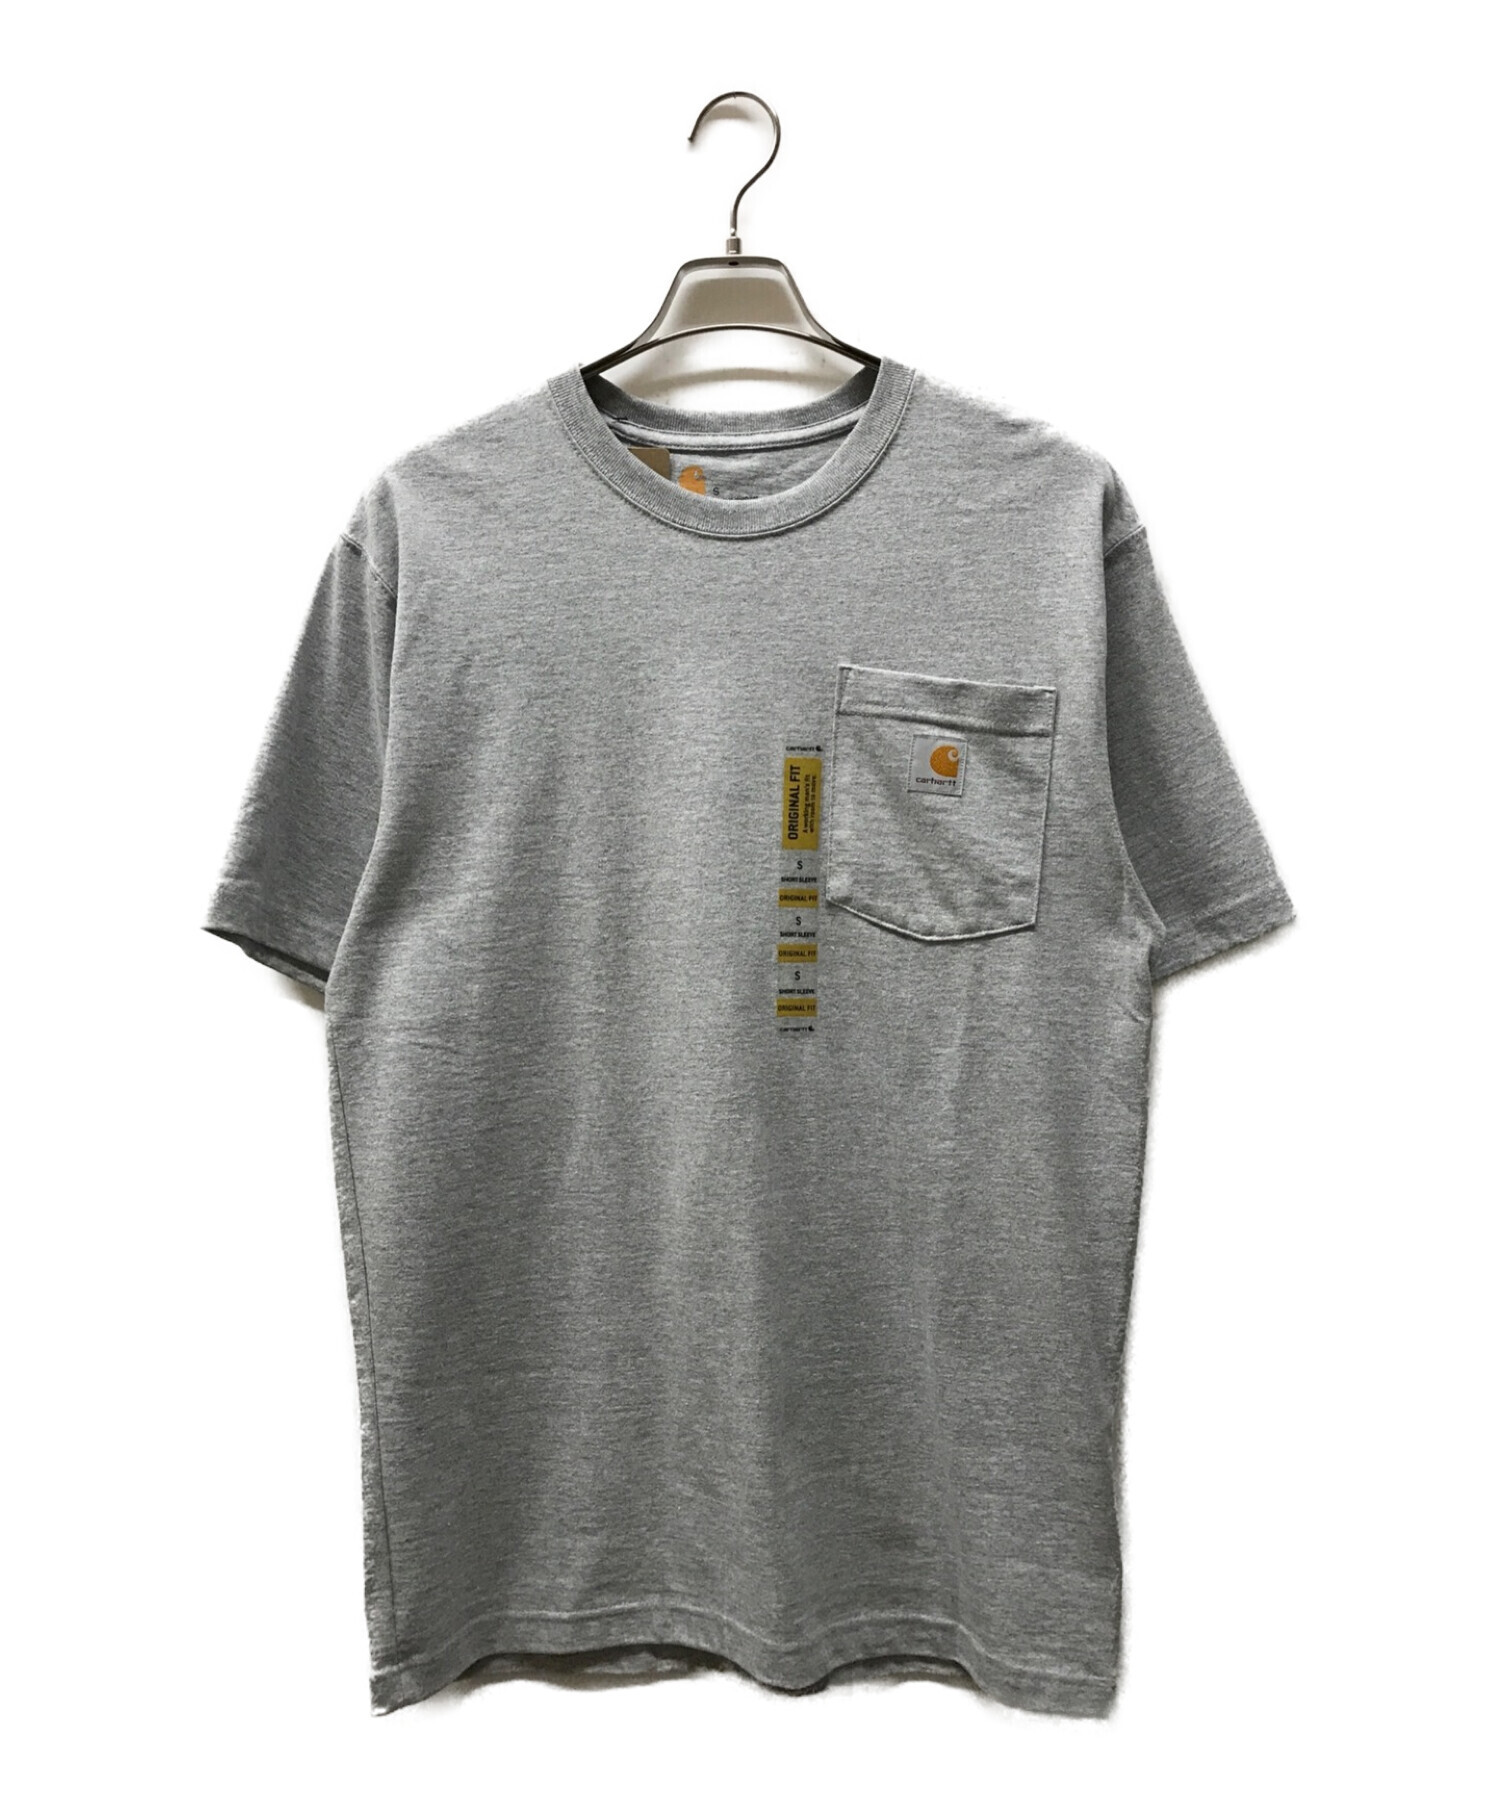 CarHartt (カーハート) ポケットTシャツ グレー サイズ:S 未使用品